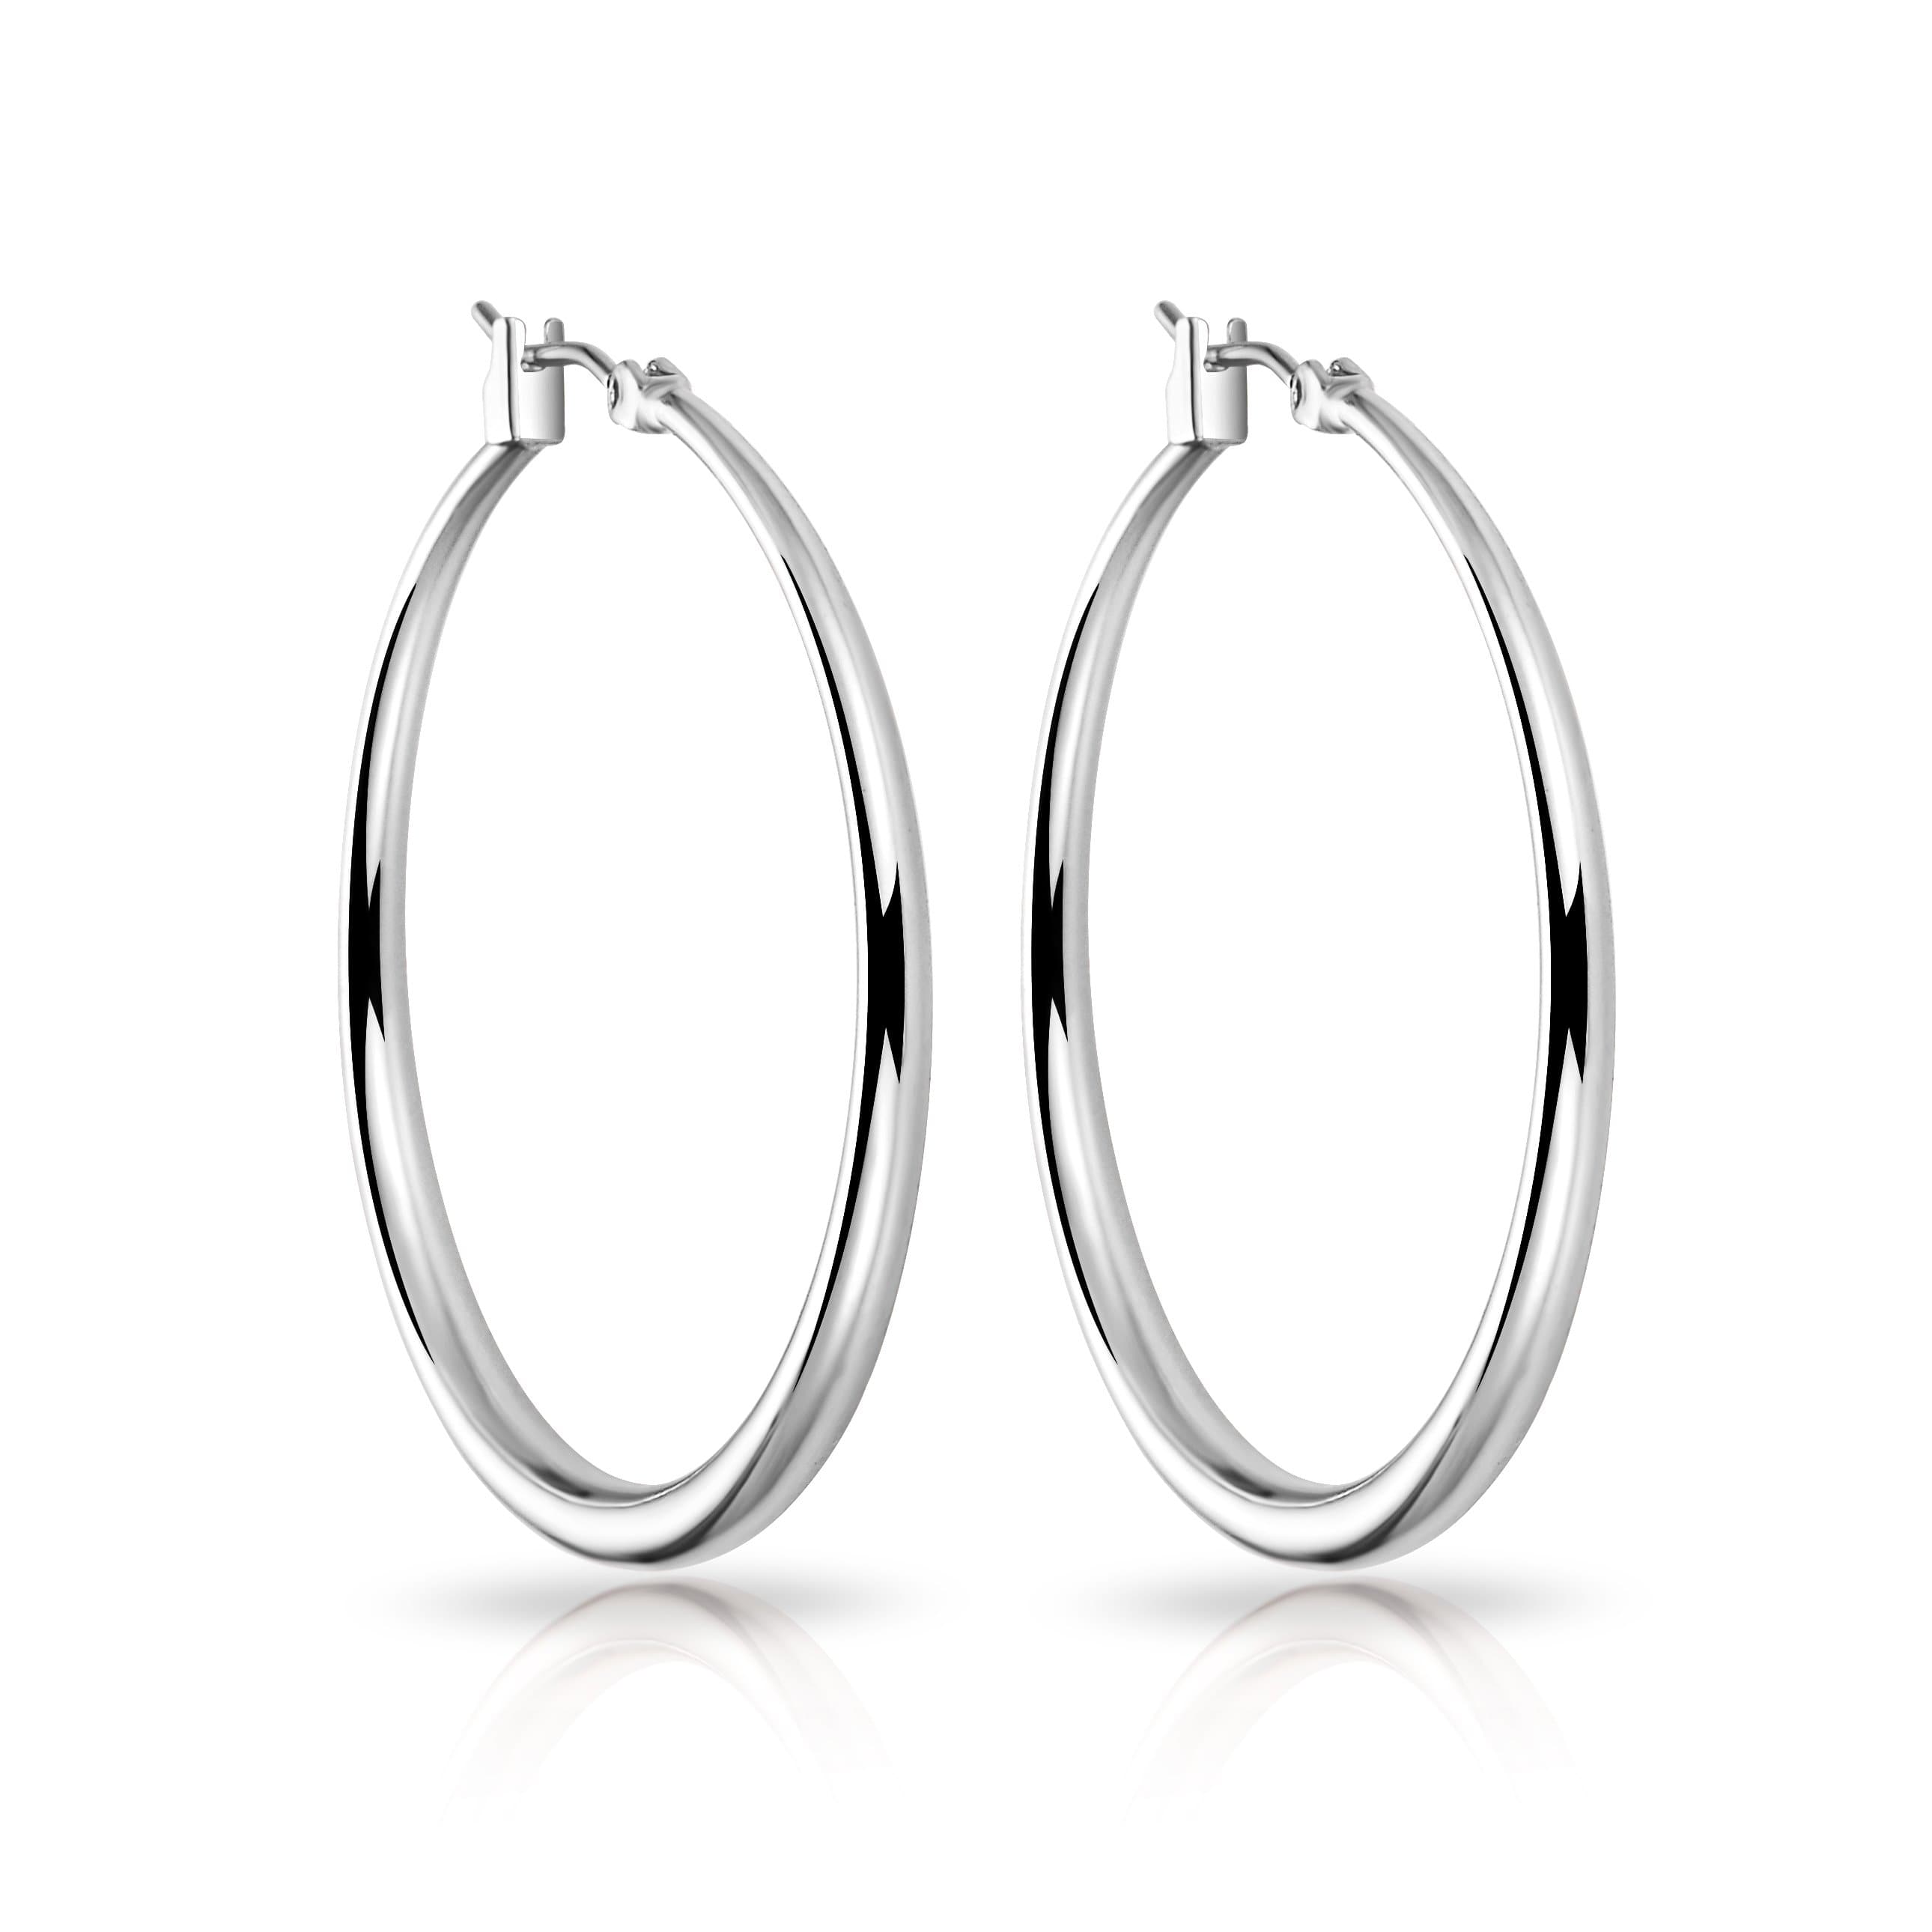 Silver Plated 40mm Hoop Earrings by Philip Jones Jewellery